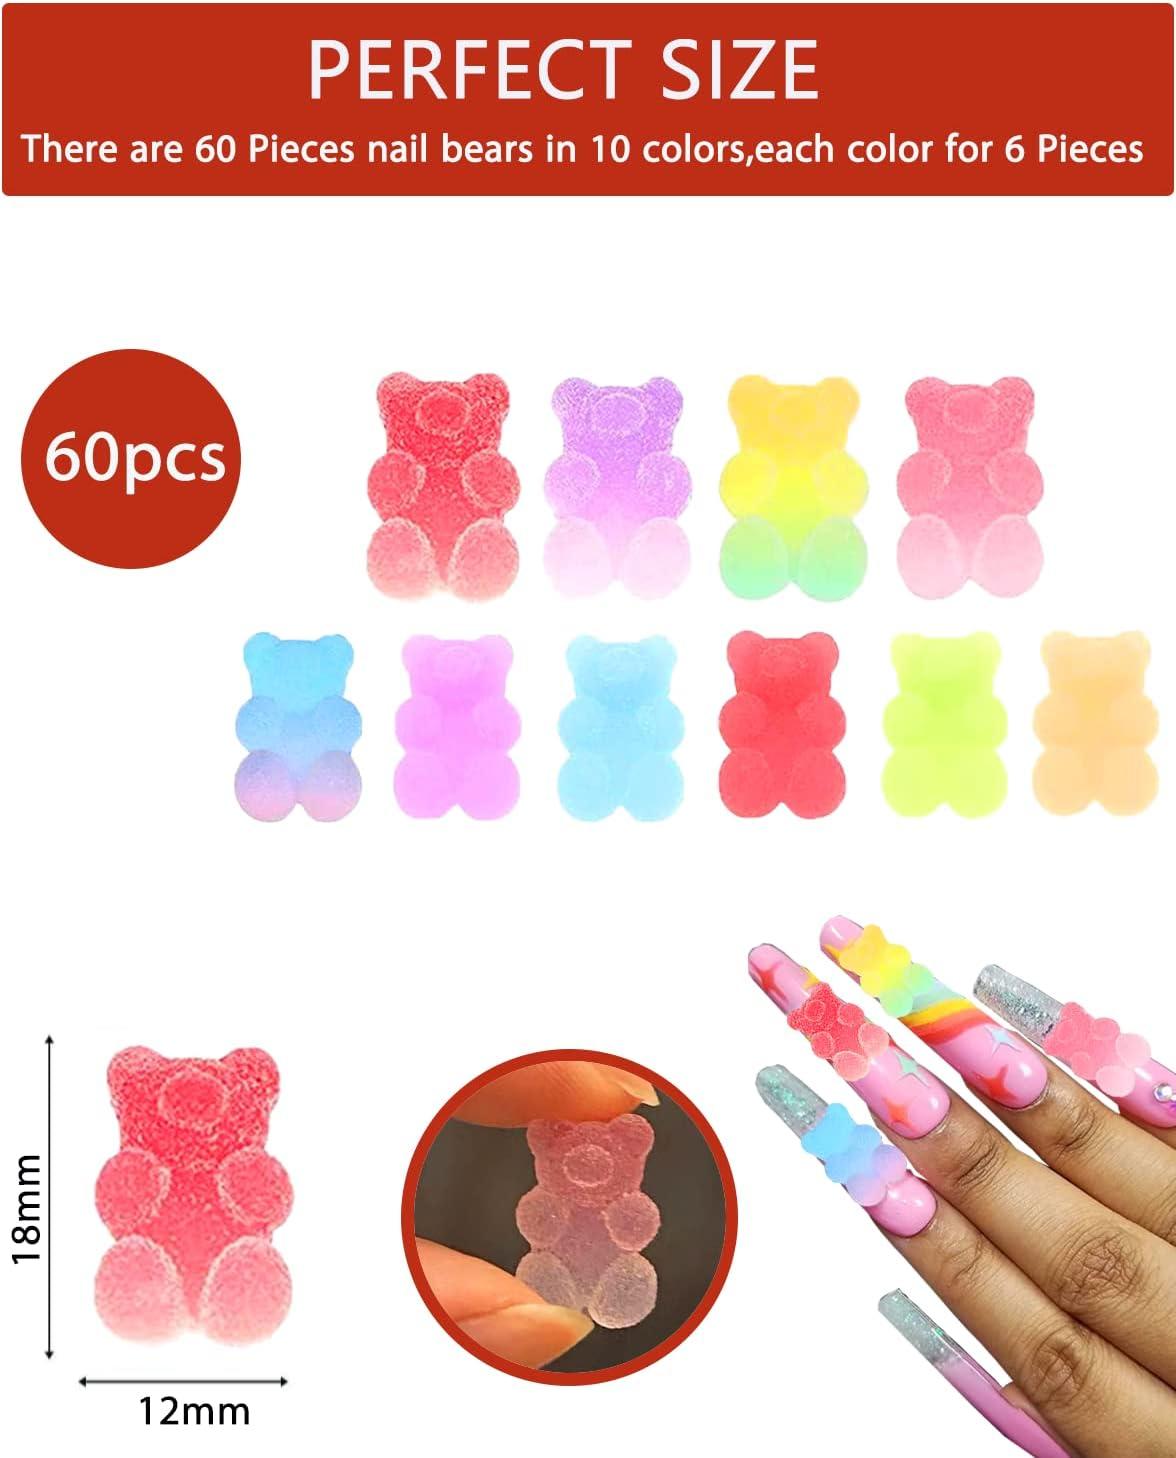 60 Pieces Gummy Bear Nail Charms,Resin Flatback Fake Gummy Bears